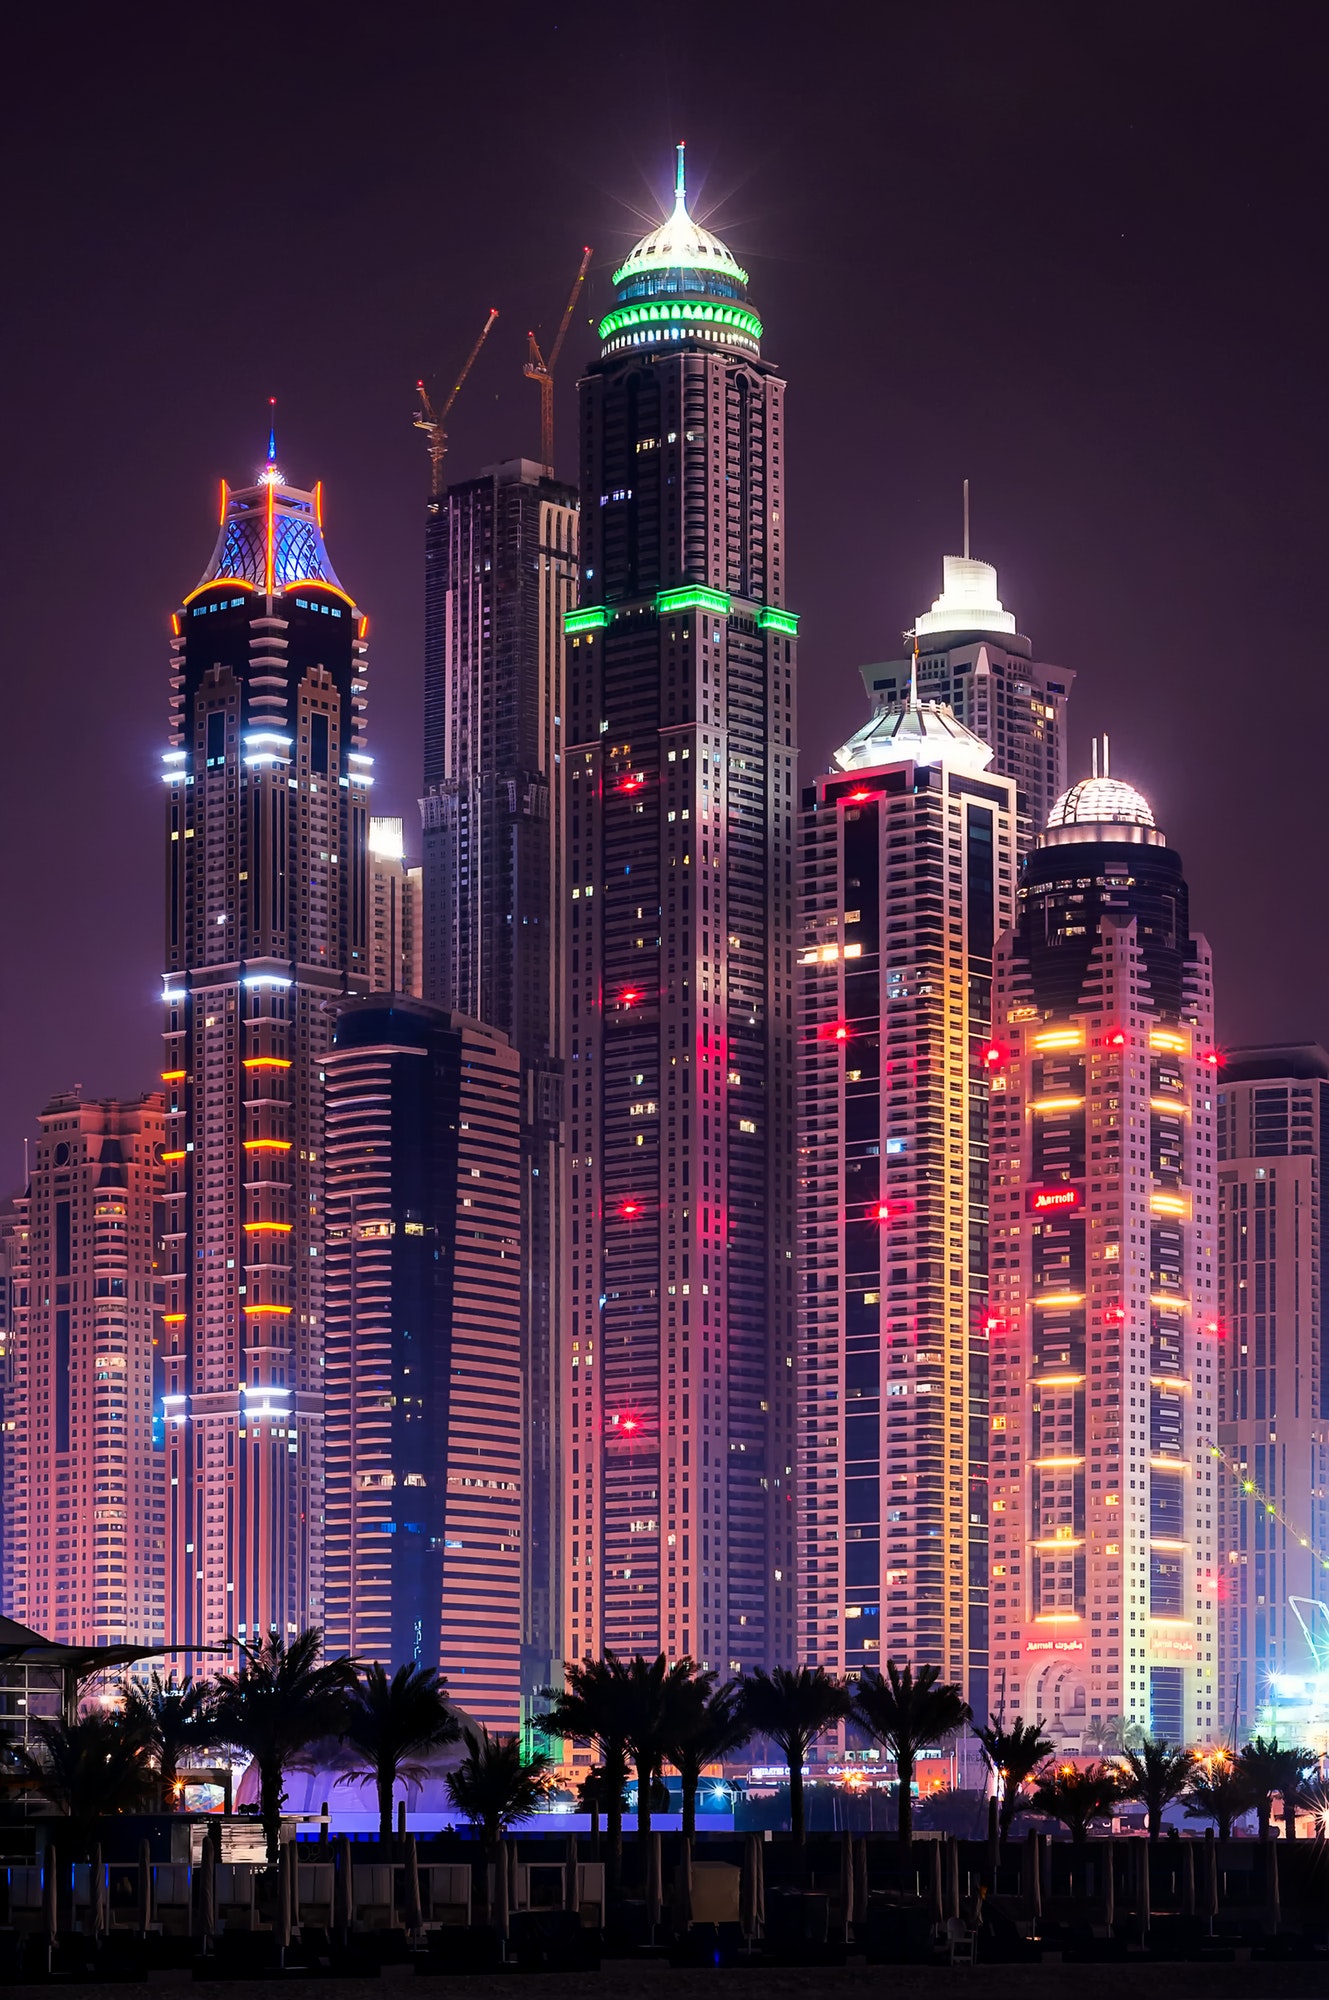 Night dubai marina skyline with tallest buildings. Dubai, United Arab Emirates